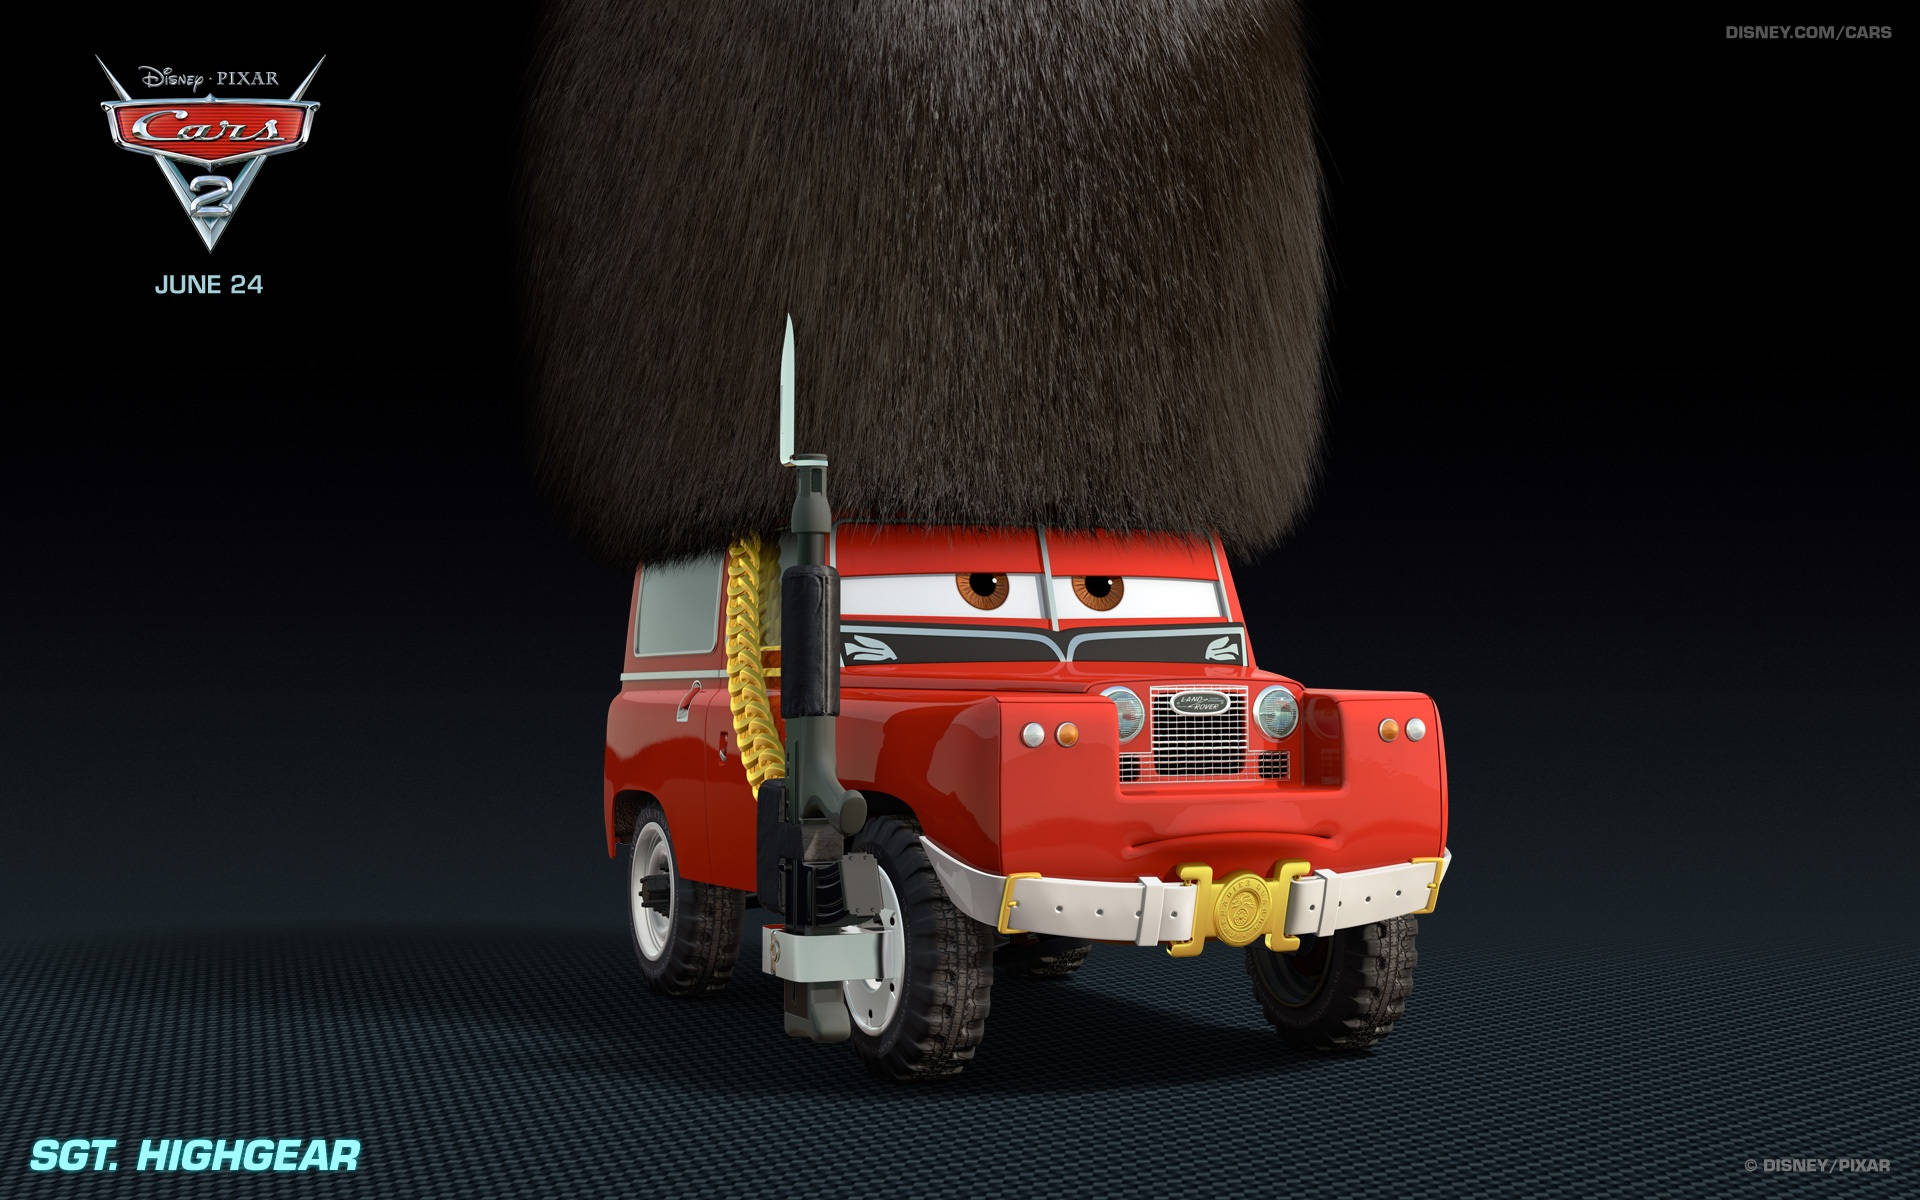 Disney Pixar Sgt. Highgear Cars 2 Background